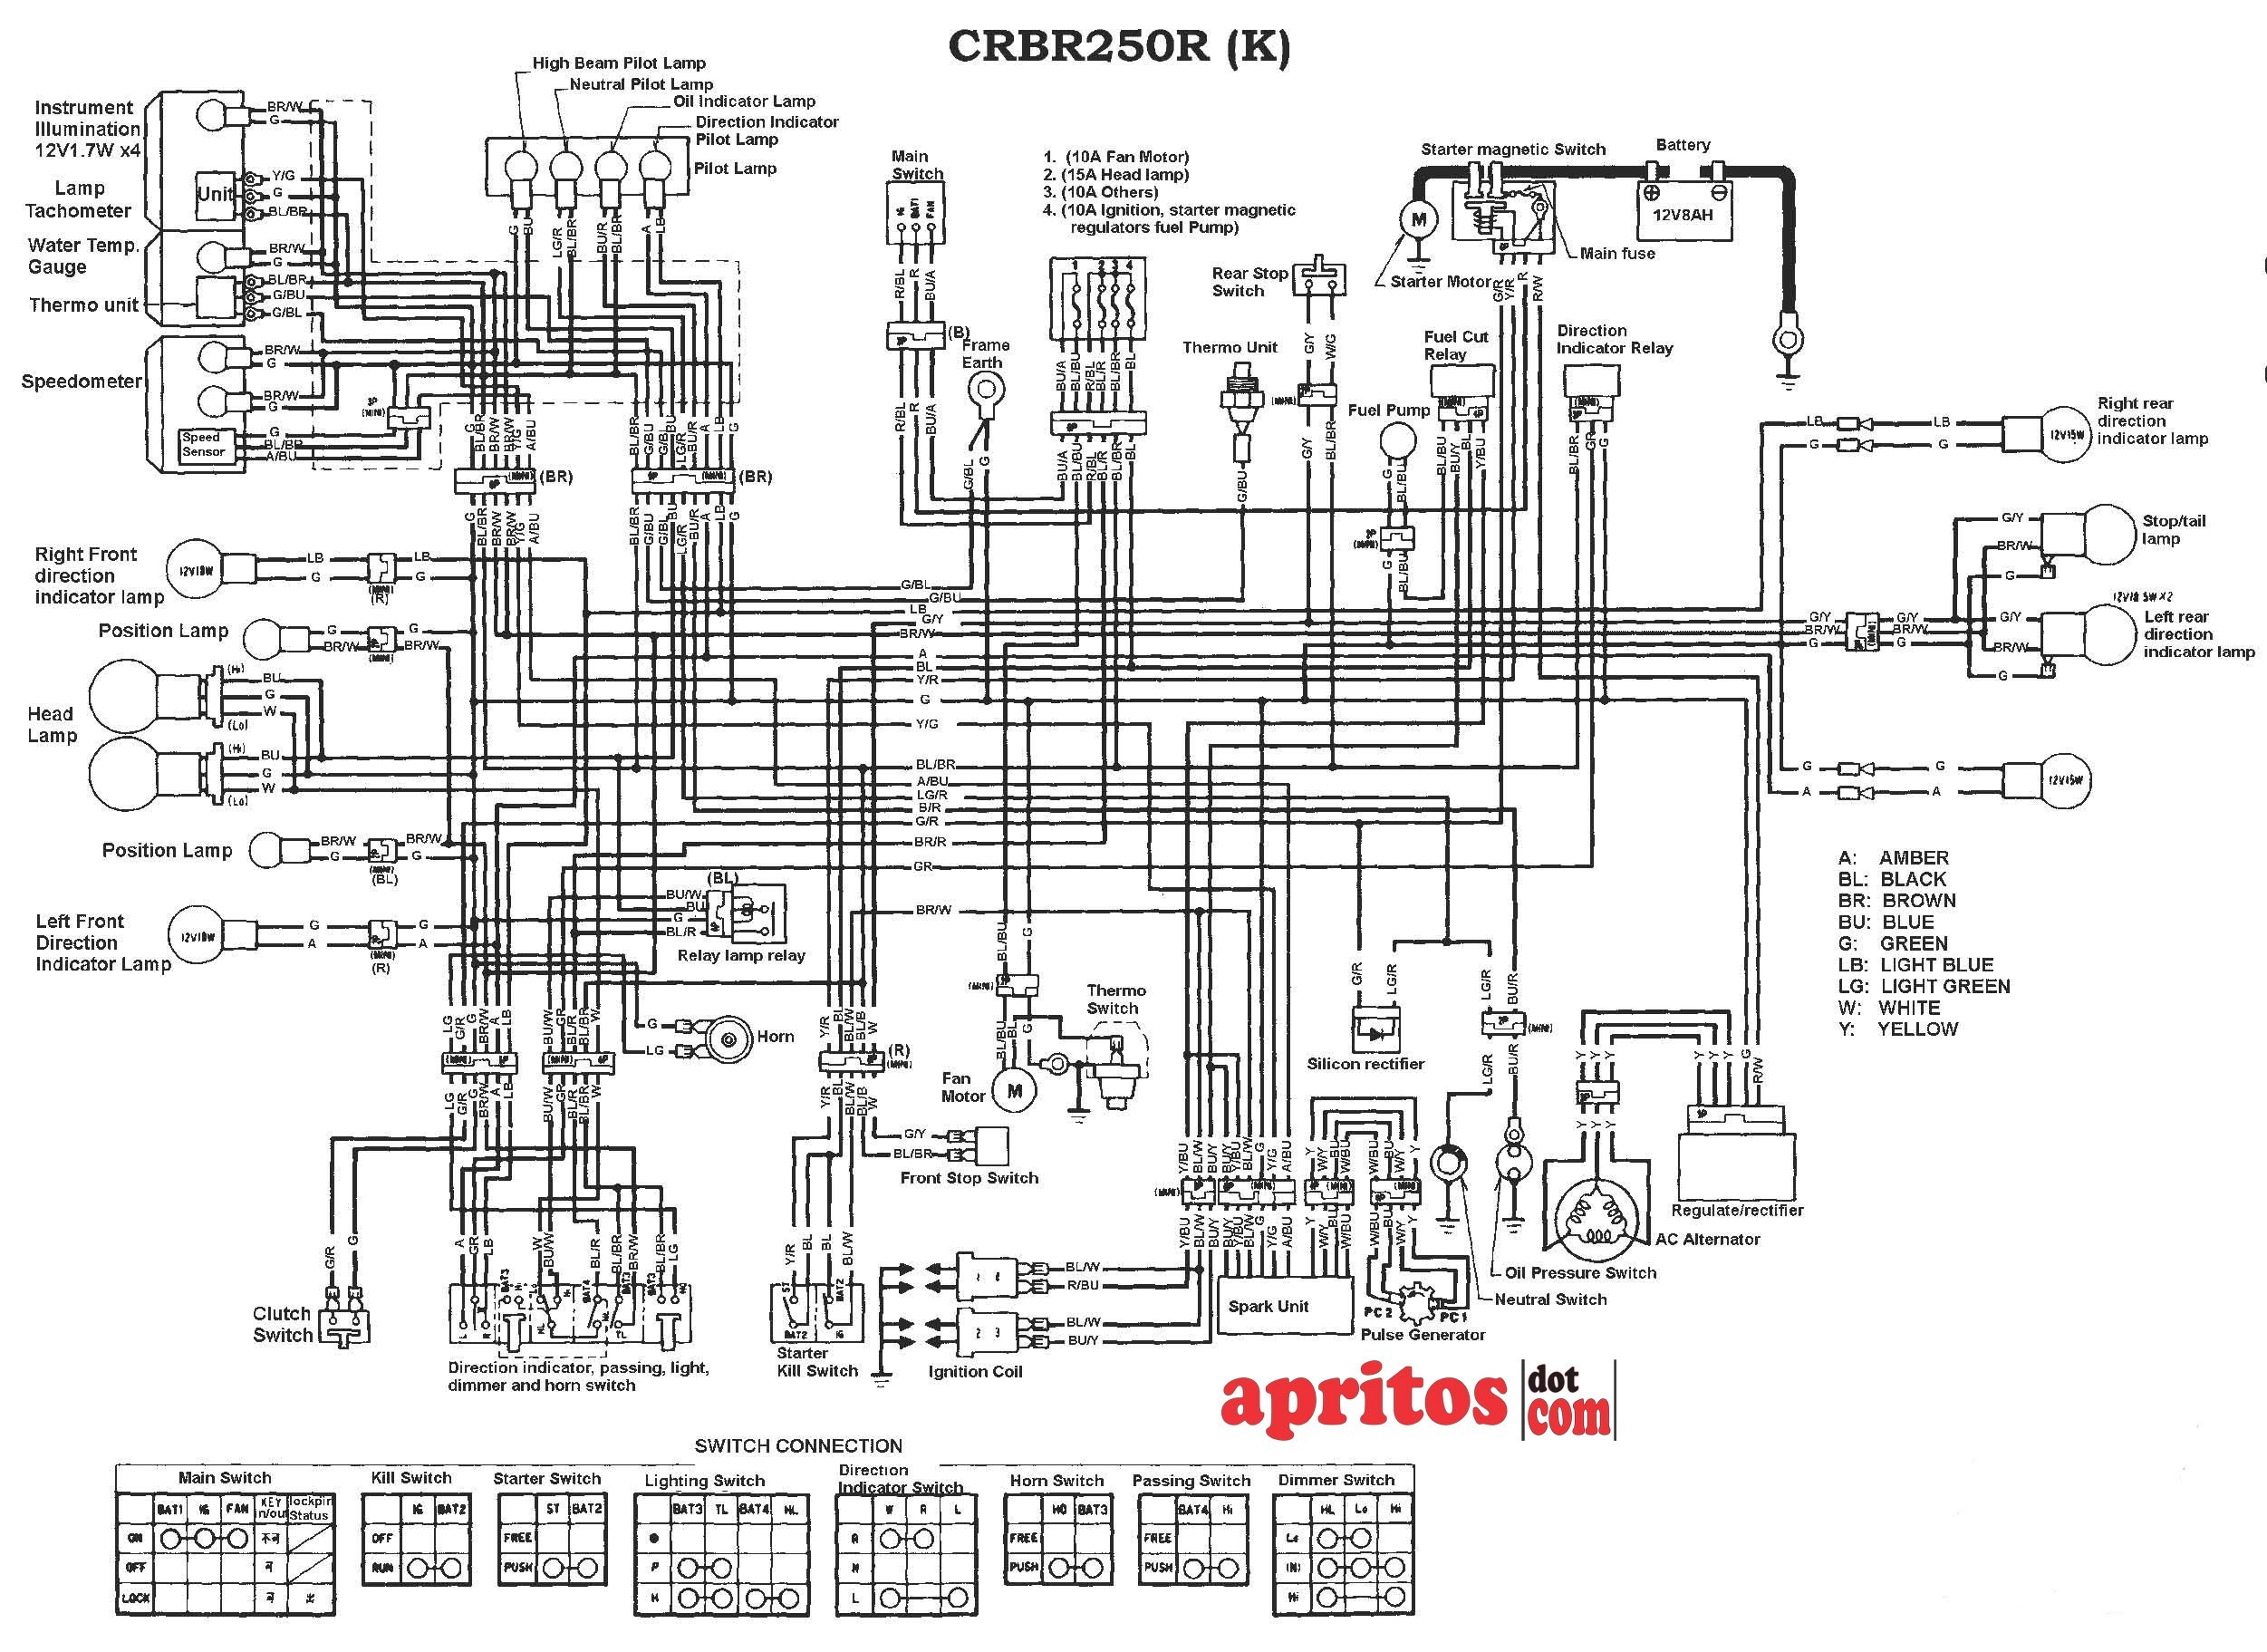 2008 Malibu Starter Circuit Schematic Diagram] Honda Cbr 250 Wiring Diagram Full Version Hd Of 2008 Malibu Starter Circuit Schematic